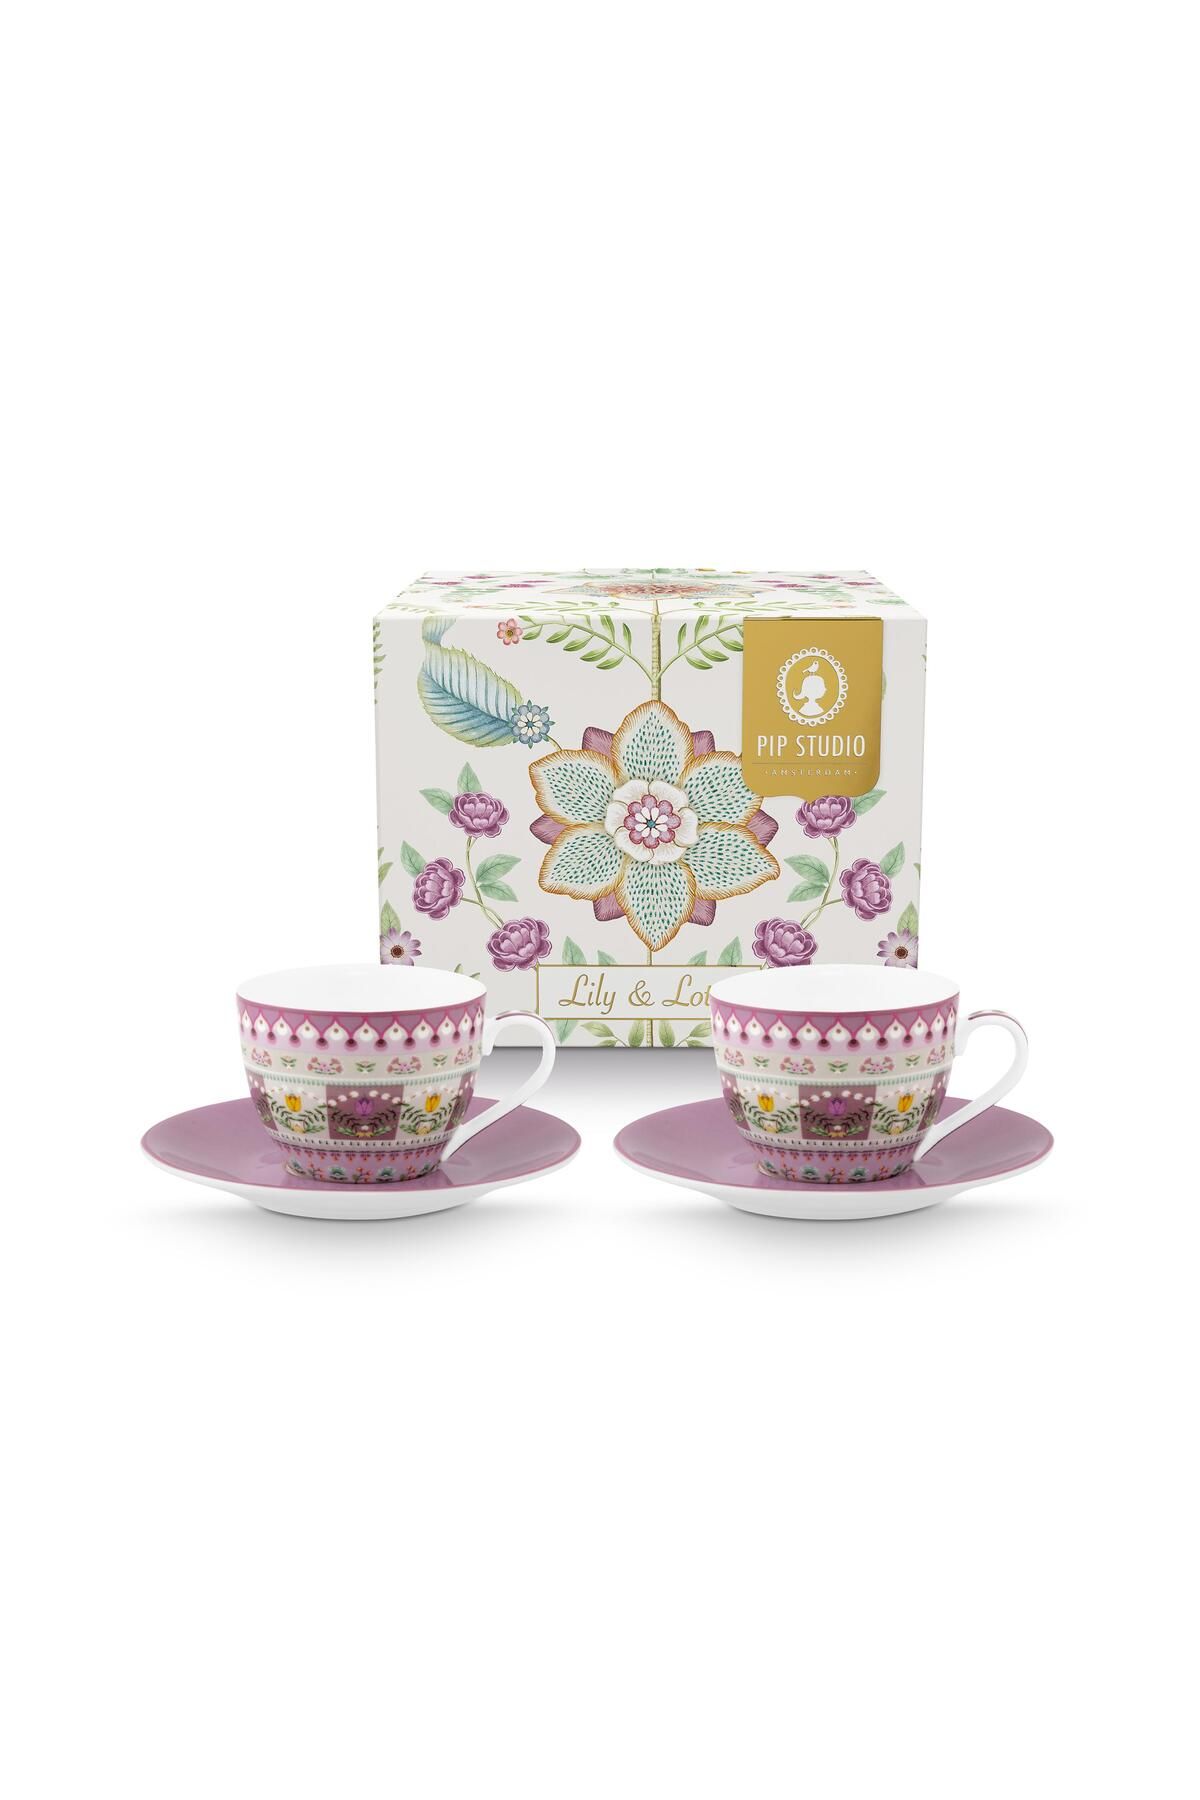 Pip Studio Lily & Lotus Mor Porselen Kahve Fincan Seti 120 ml